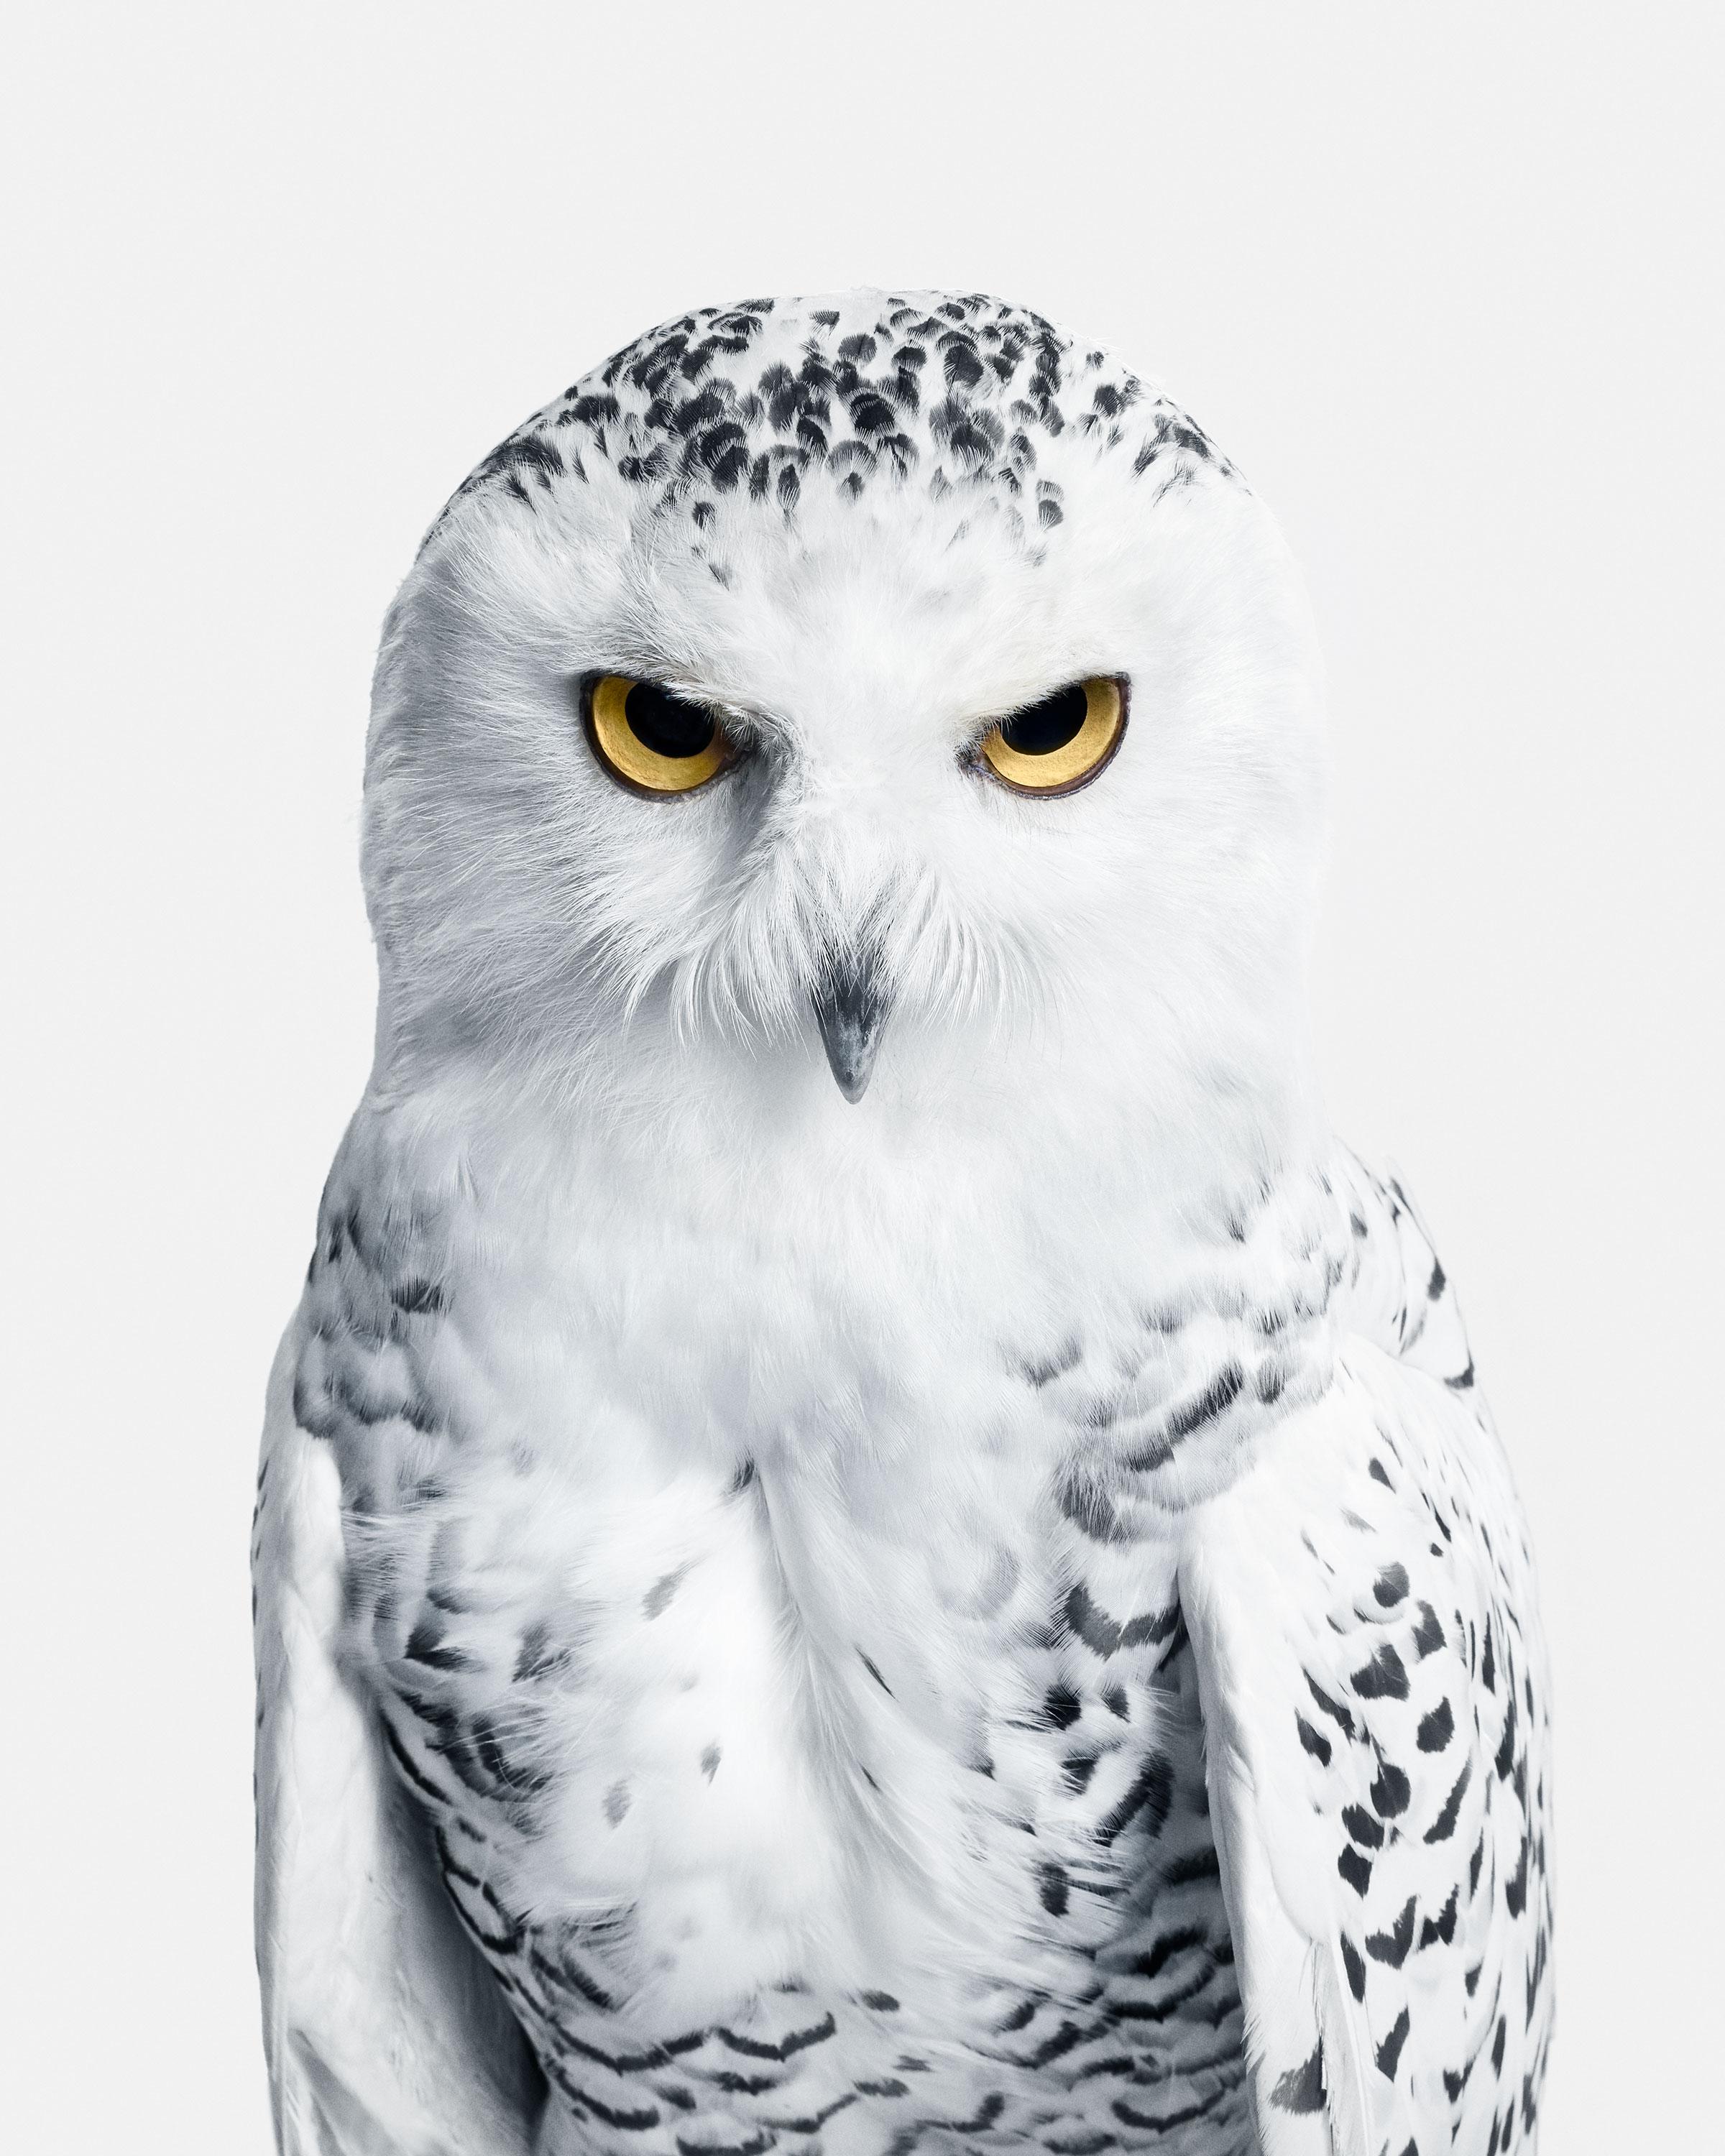 Randal Ford Animal Print - Snowy Owl No. 3 (60" x 48")